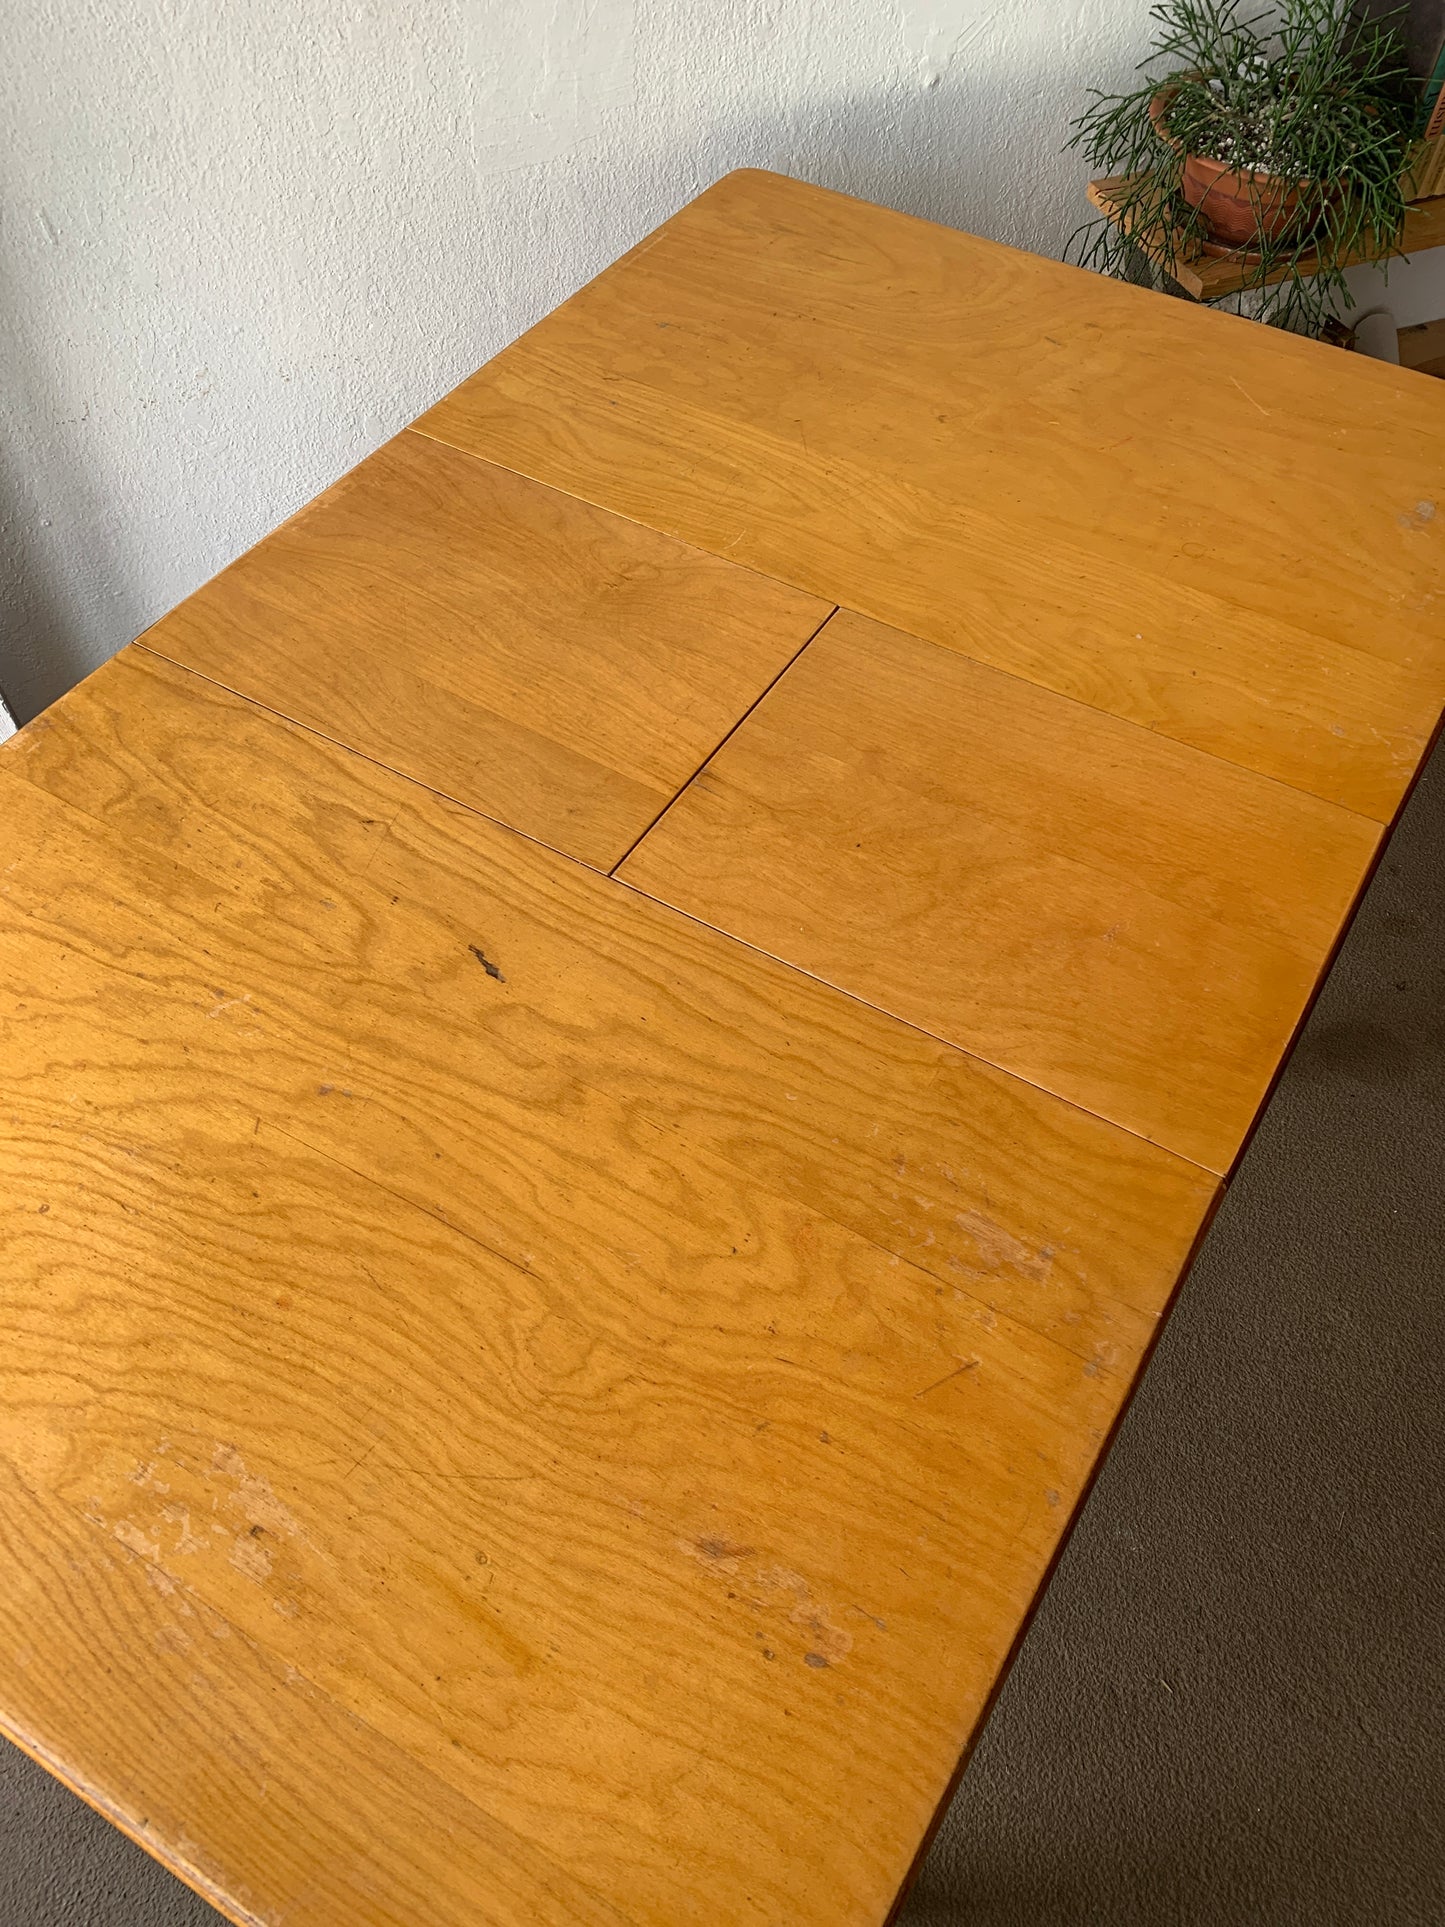 Vintage Expanding Wood Kitchen Table